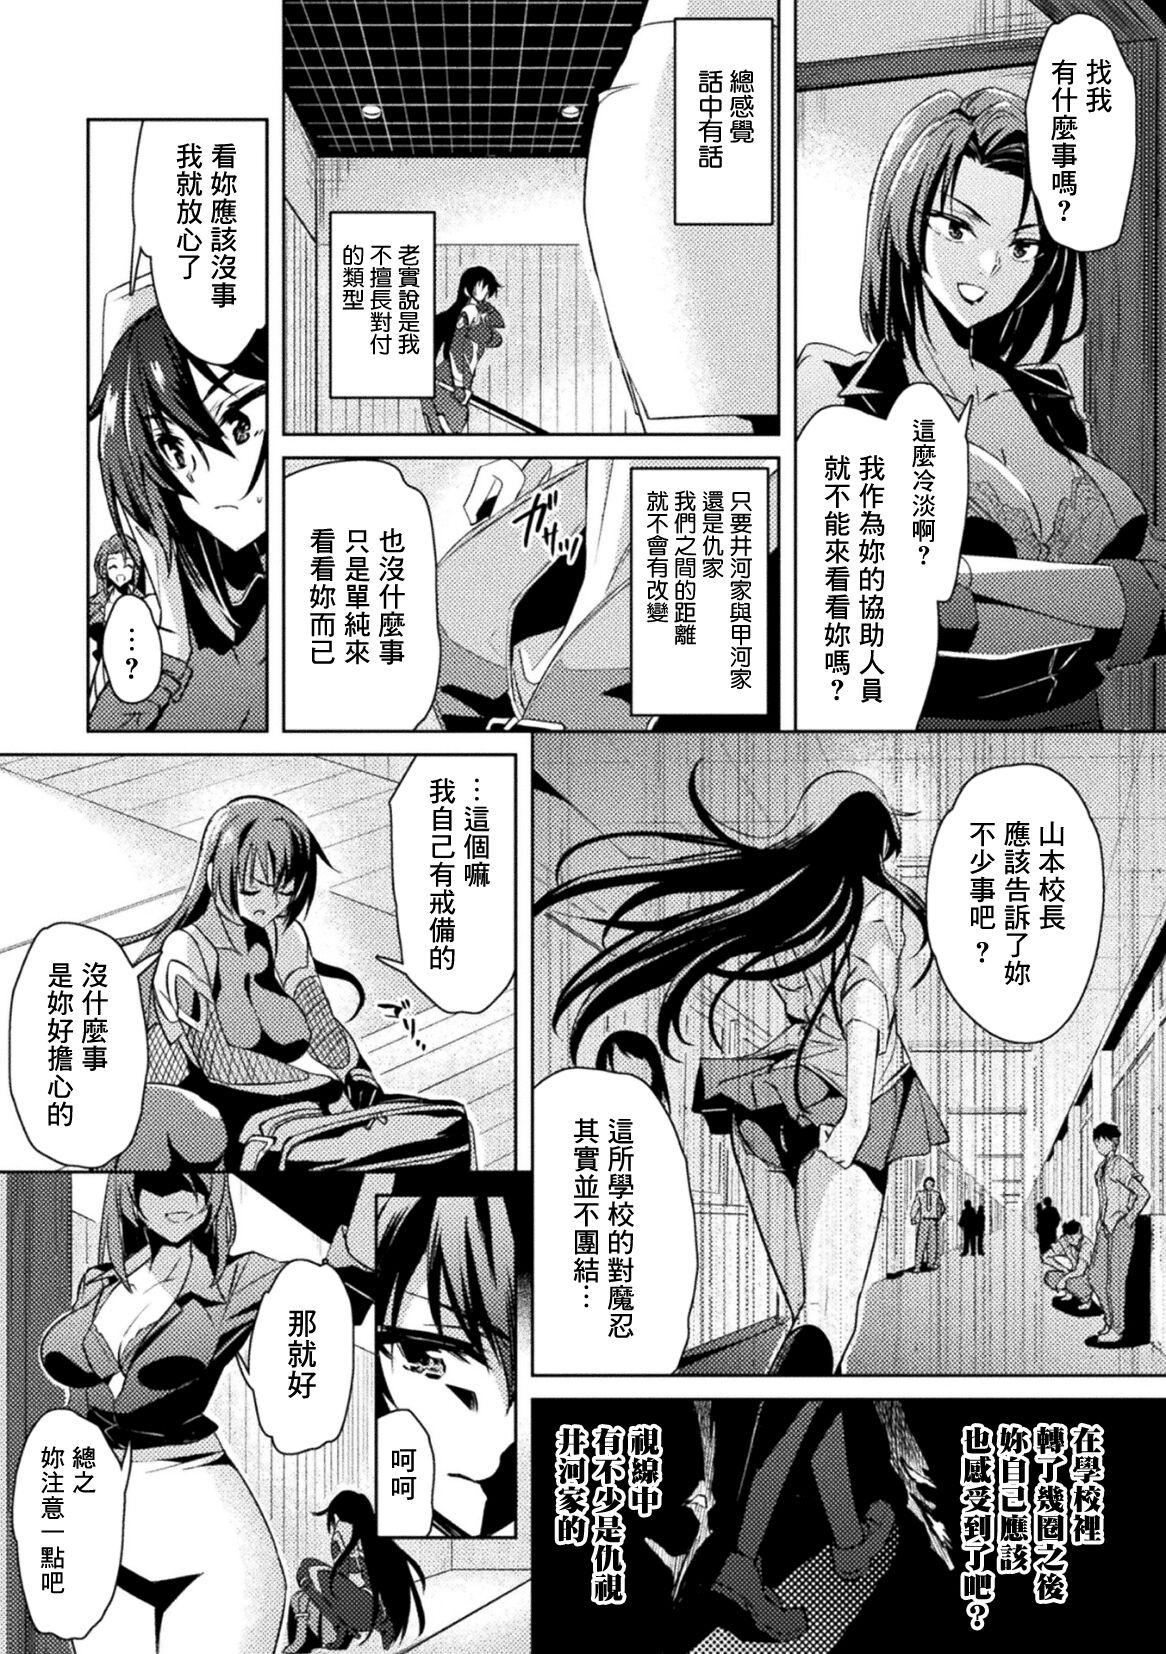 Pretty Taimanin Asagi. ZERO THE COMIC Dai-ni no Maki Shuugeki - Taimanin asagi Cavalgando - Page 4